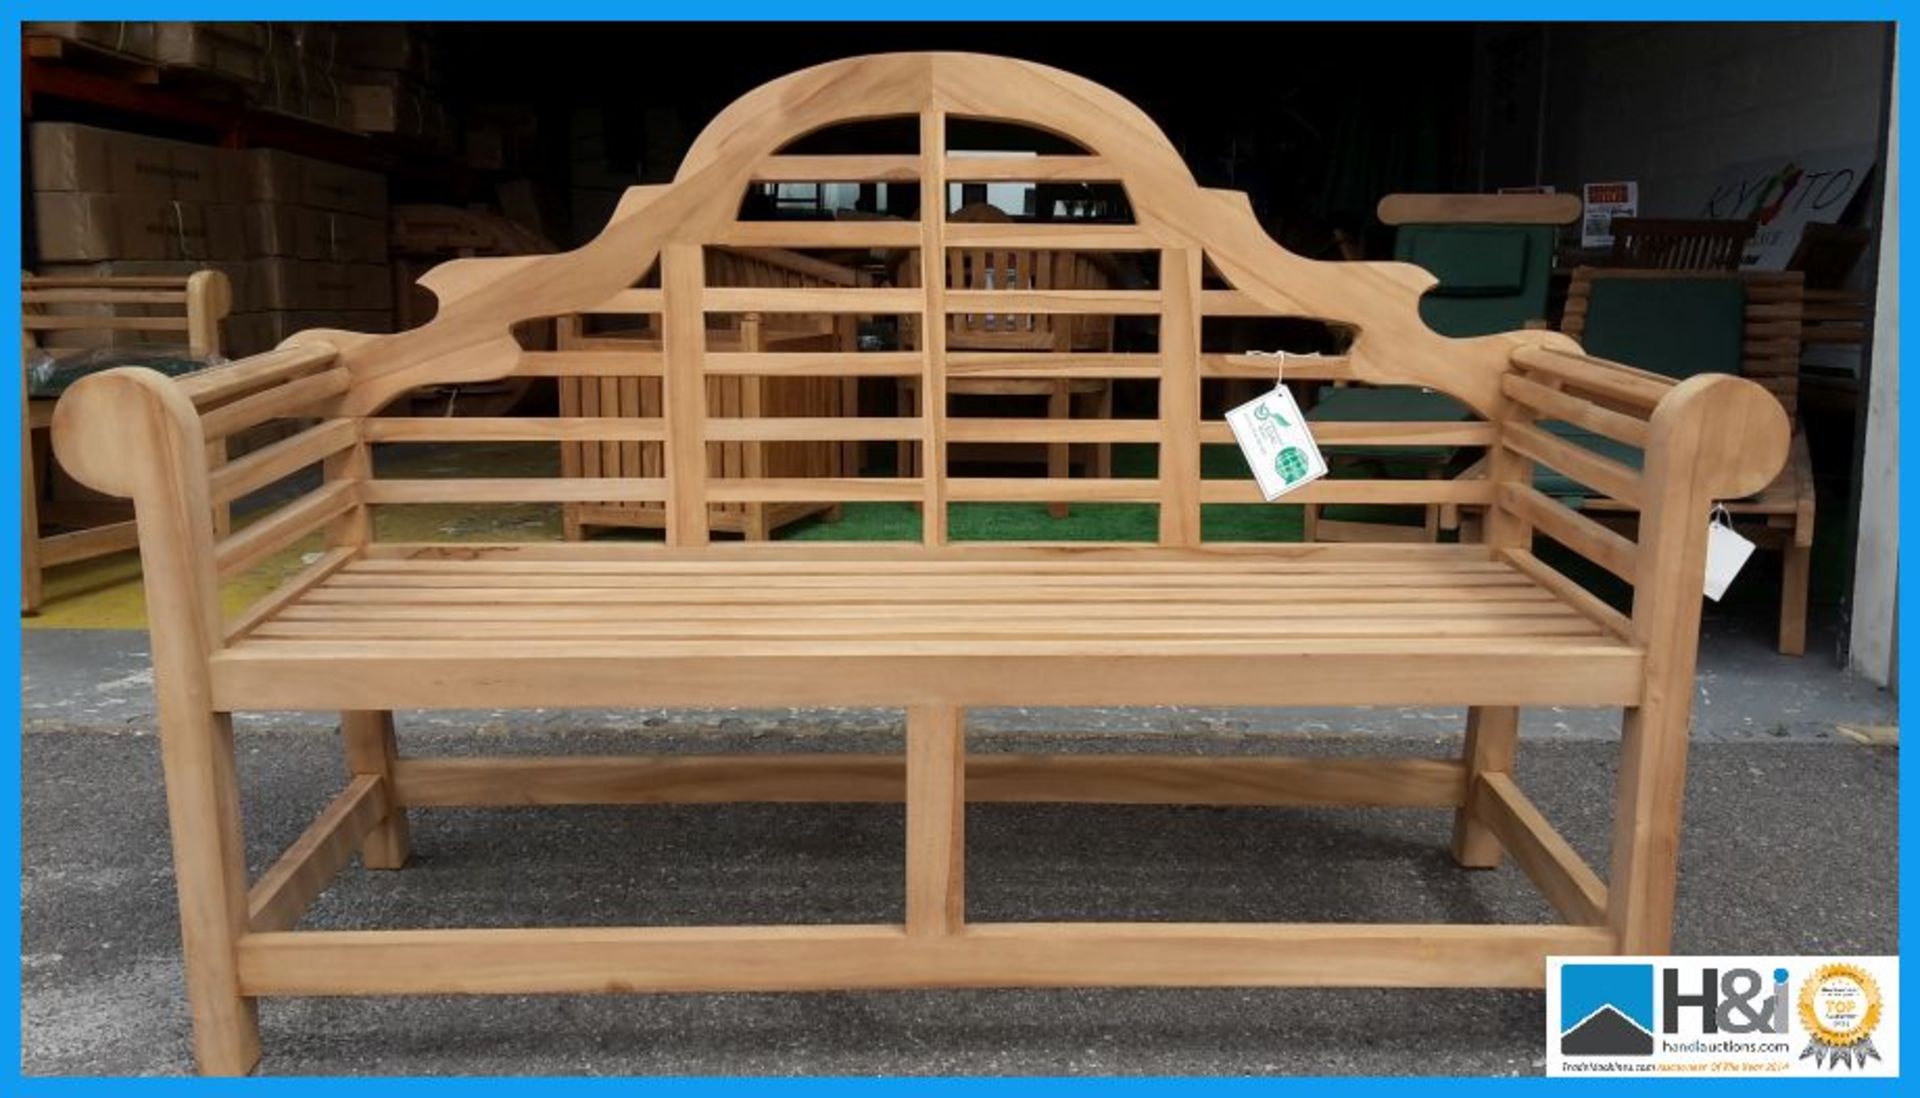 Teak Marlborough/ Lutyens Garden Bench. One of our most popular lines the Marlborough bench is